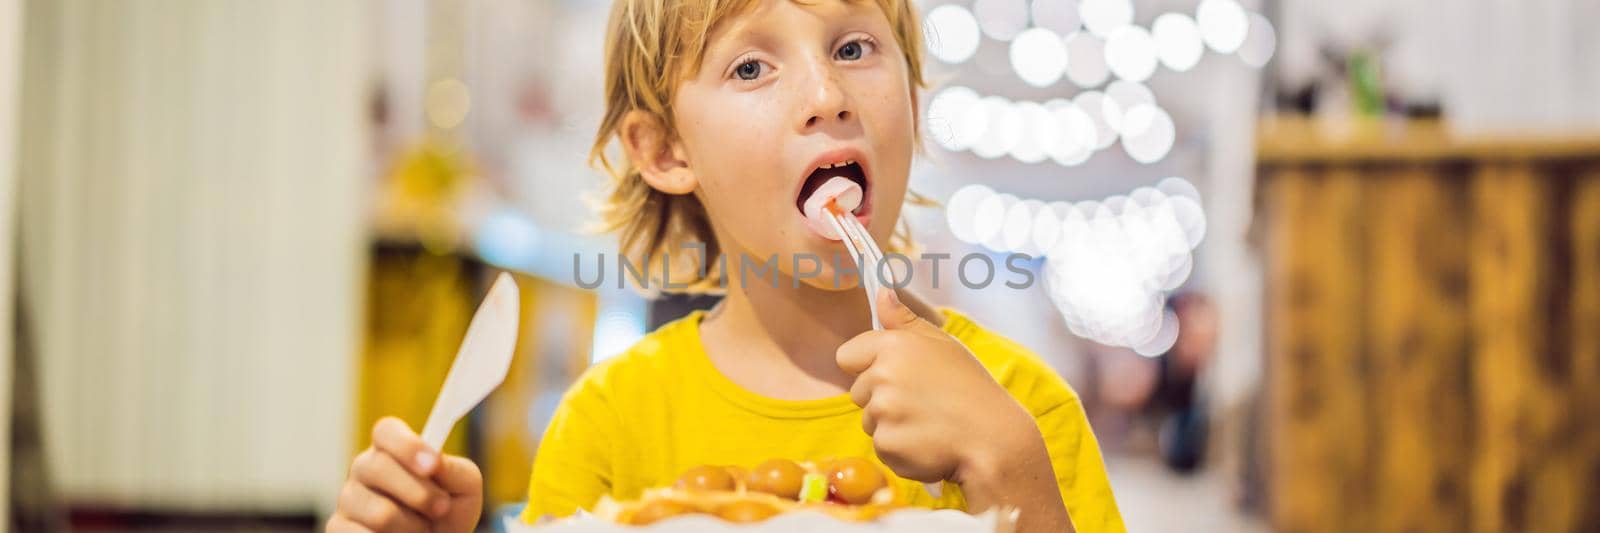 A little boy eats dessert waffles with jam in a cafe BANNER, LONG FORMAT by galitskaya